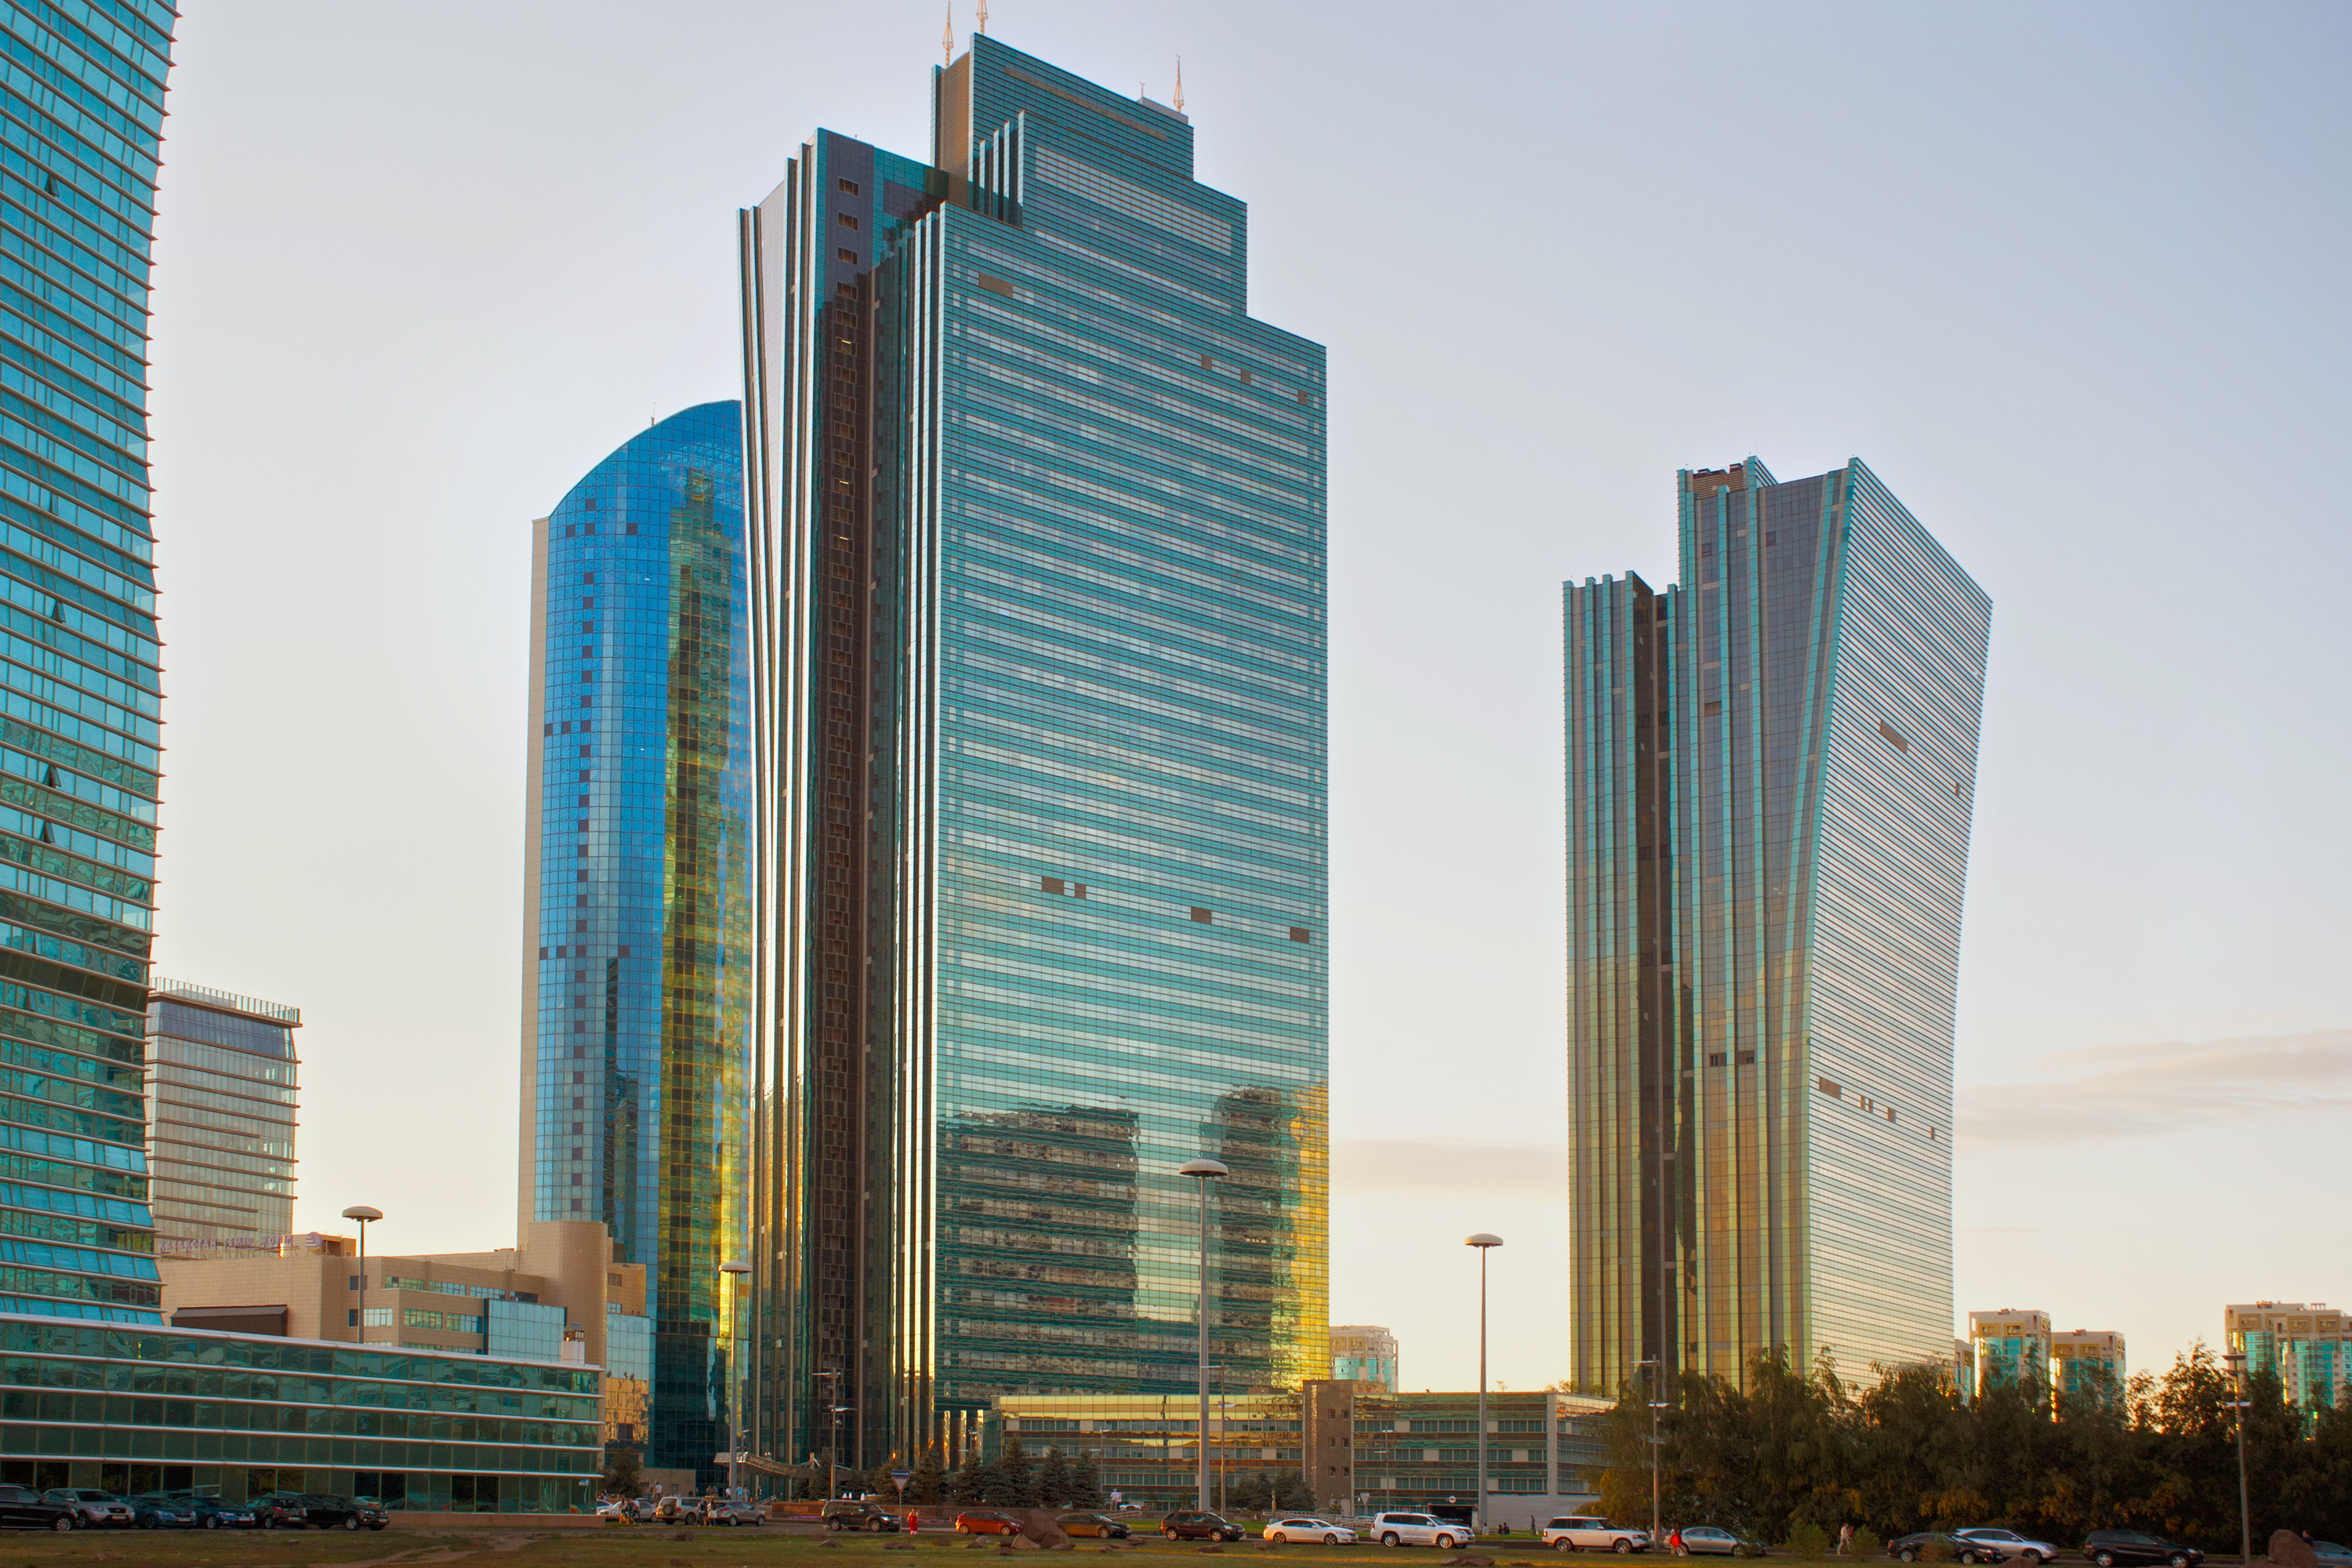 Kazakhstan and Uzbekistan are emerging as Central Asia’s top start-up hubs